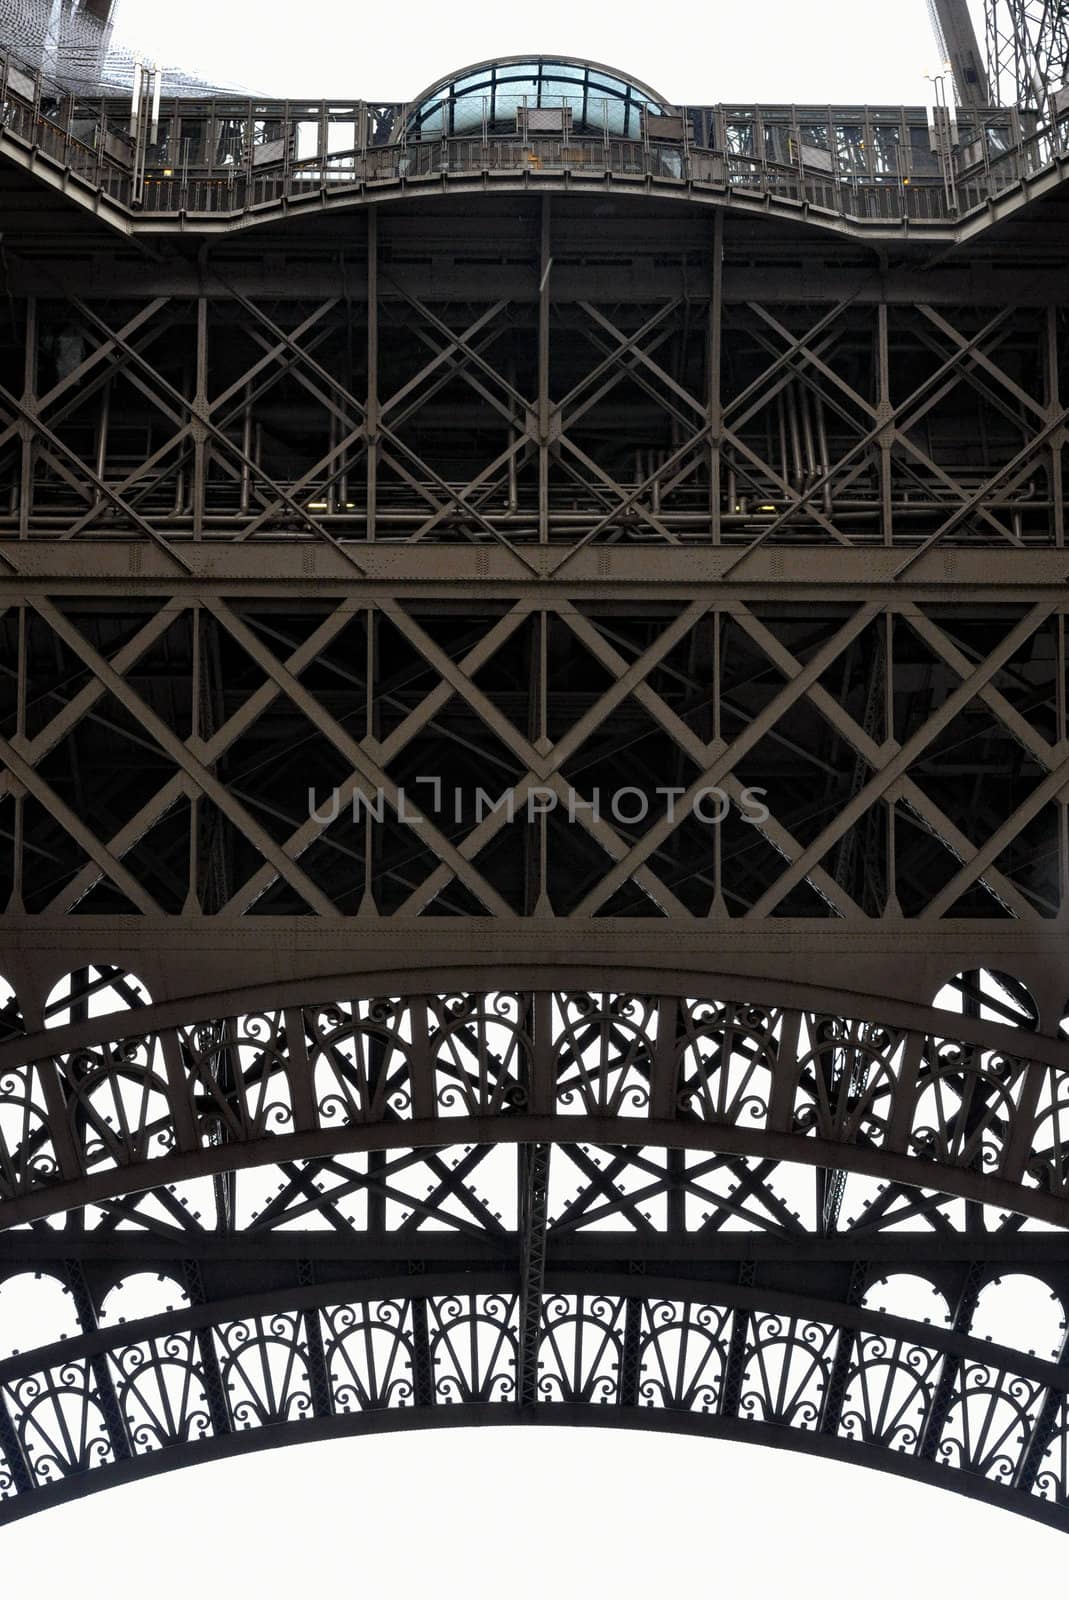 Paris - France Eiffel Tower by jmffotos